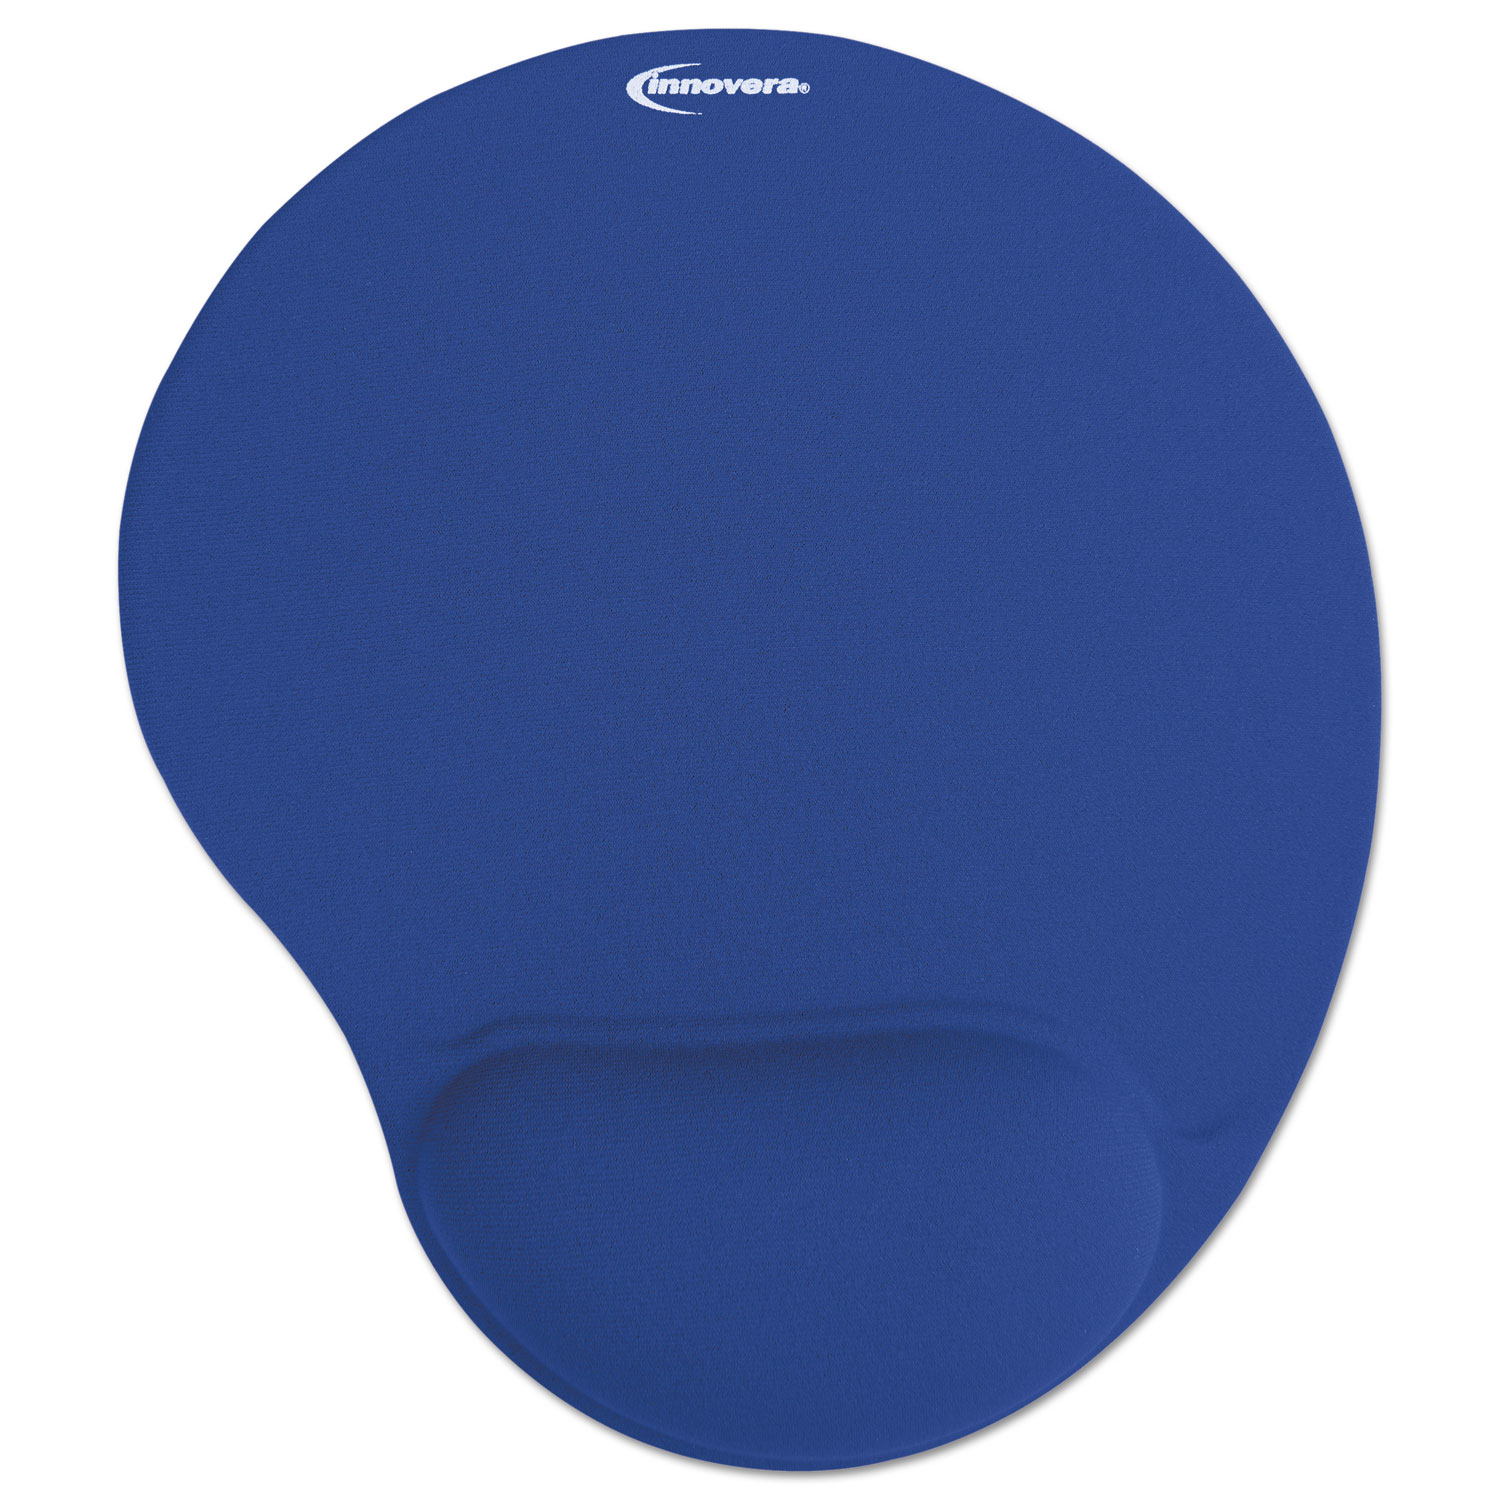  Innovera IVR50447 Mouse Pad w/Gel Wrist Pad, Nonskid Base, 10-3/8 x 8-7/8, Blue (IVR50447) 